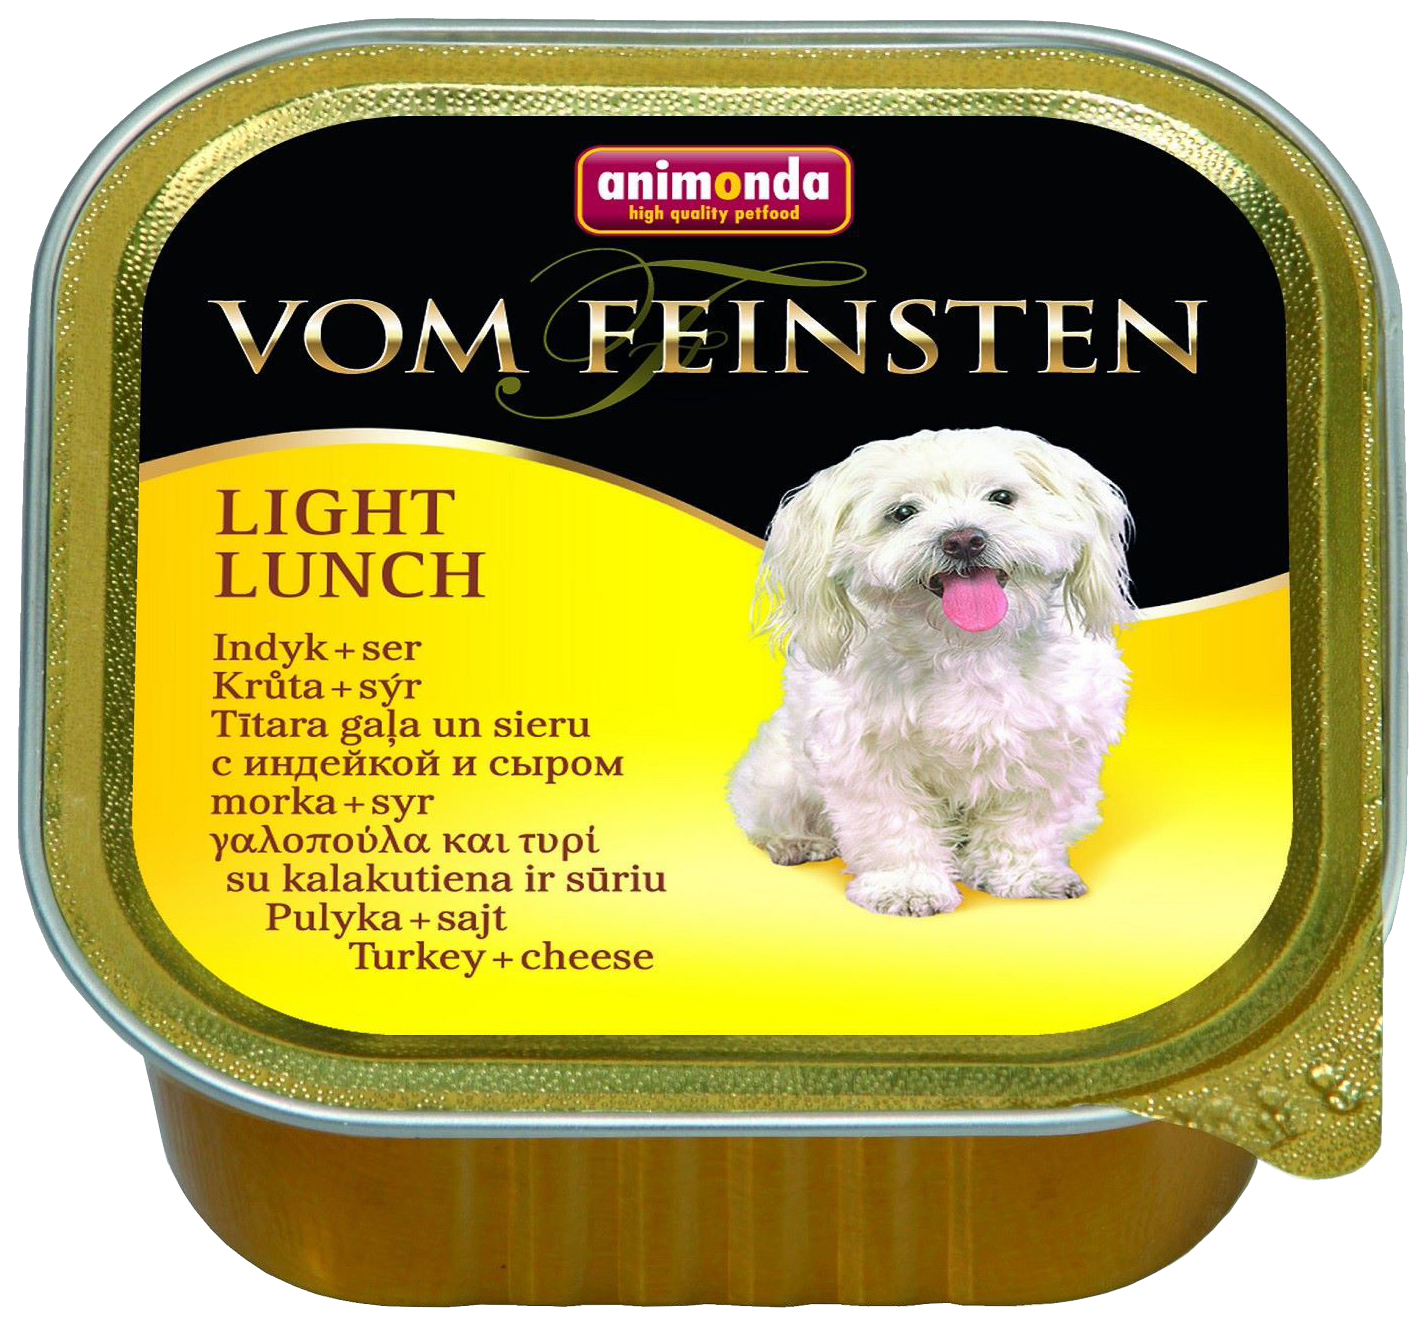 фото Консервы для собак animonda vom feinsten light lunch, индейка, сыр, 150г